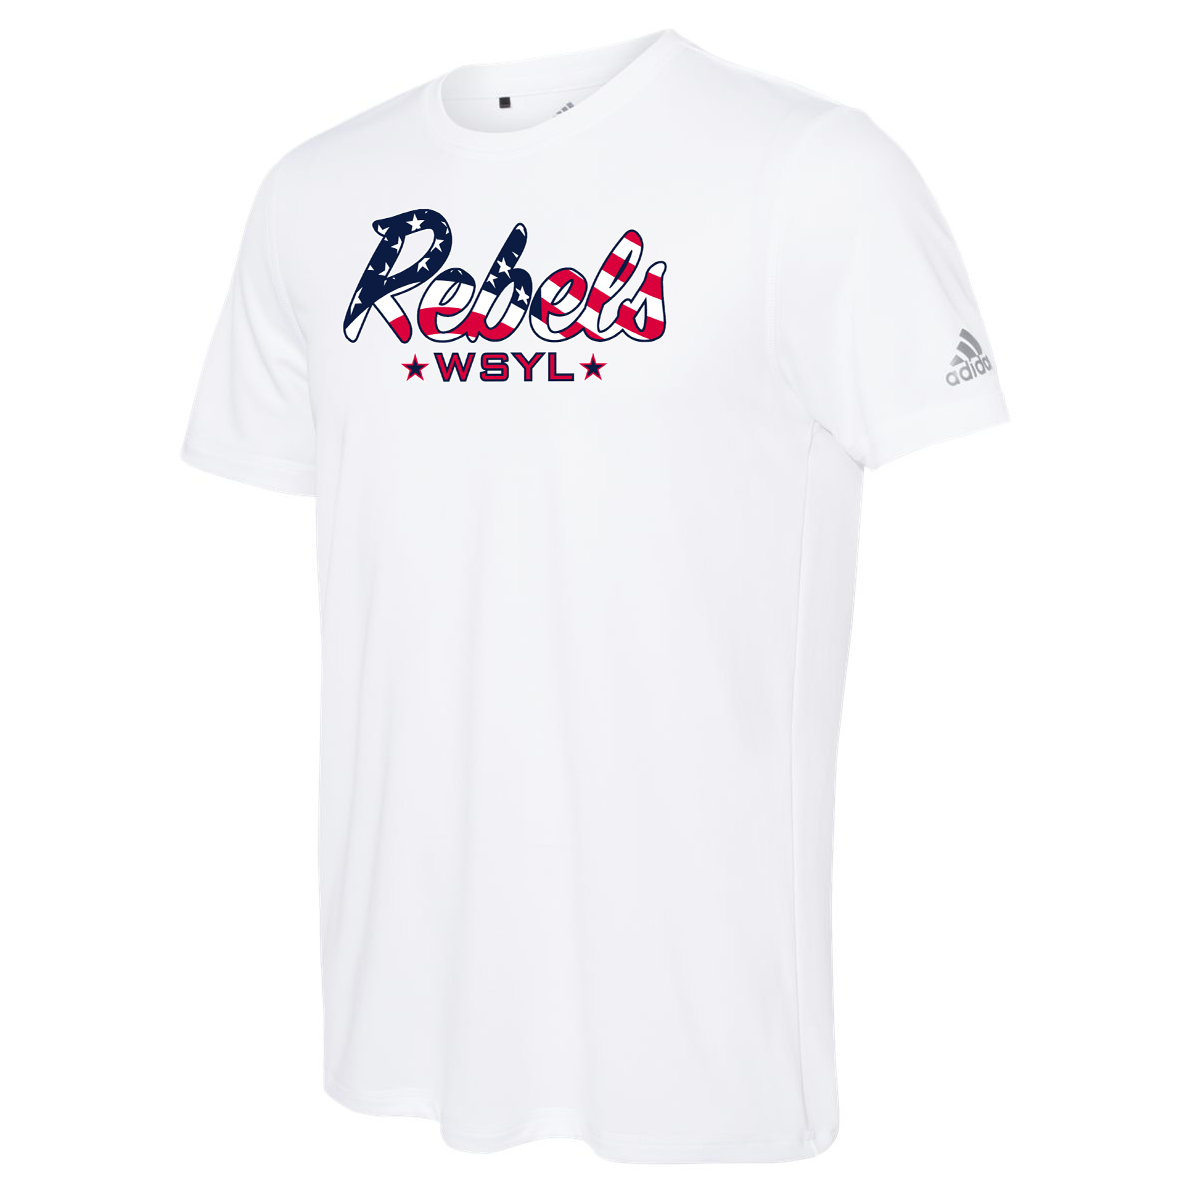 Rebels World Series Youth League Adidas Sport T-Shirt